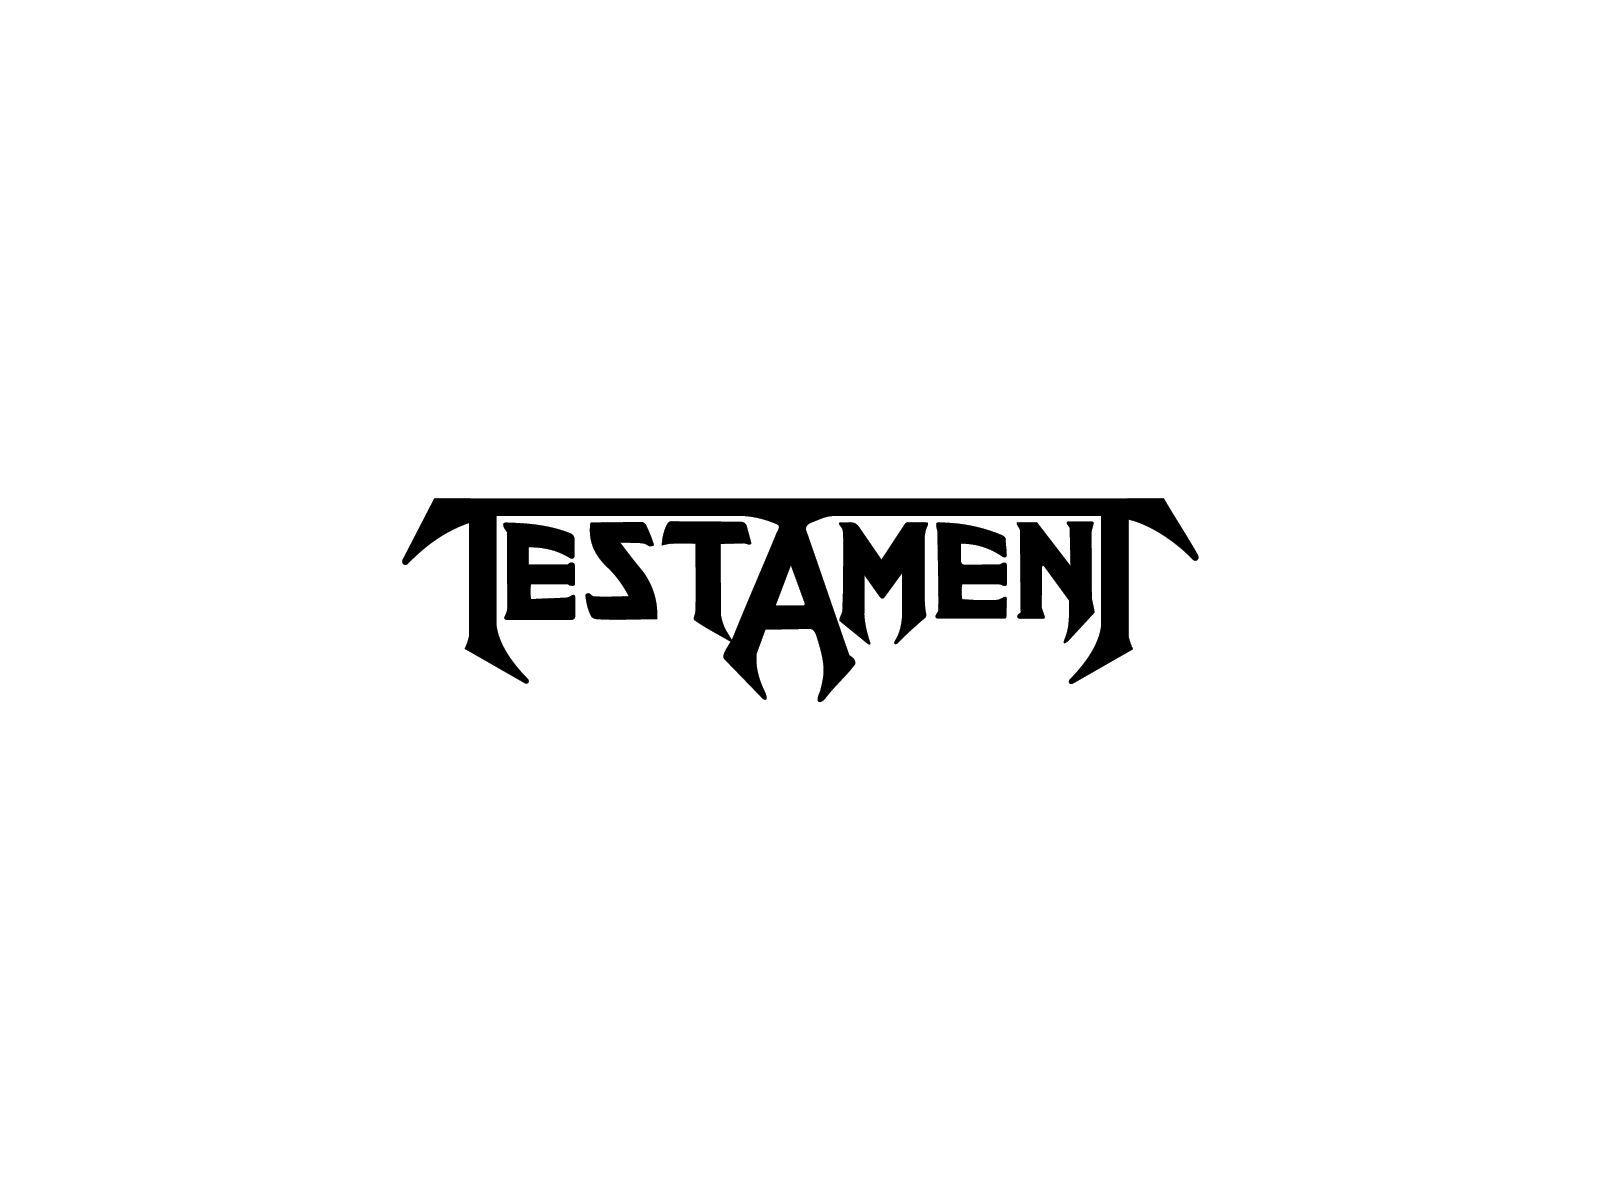 Testament logo and wallpaper. Band logos band logos, metal